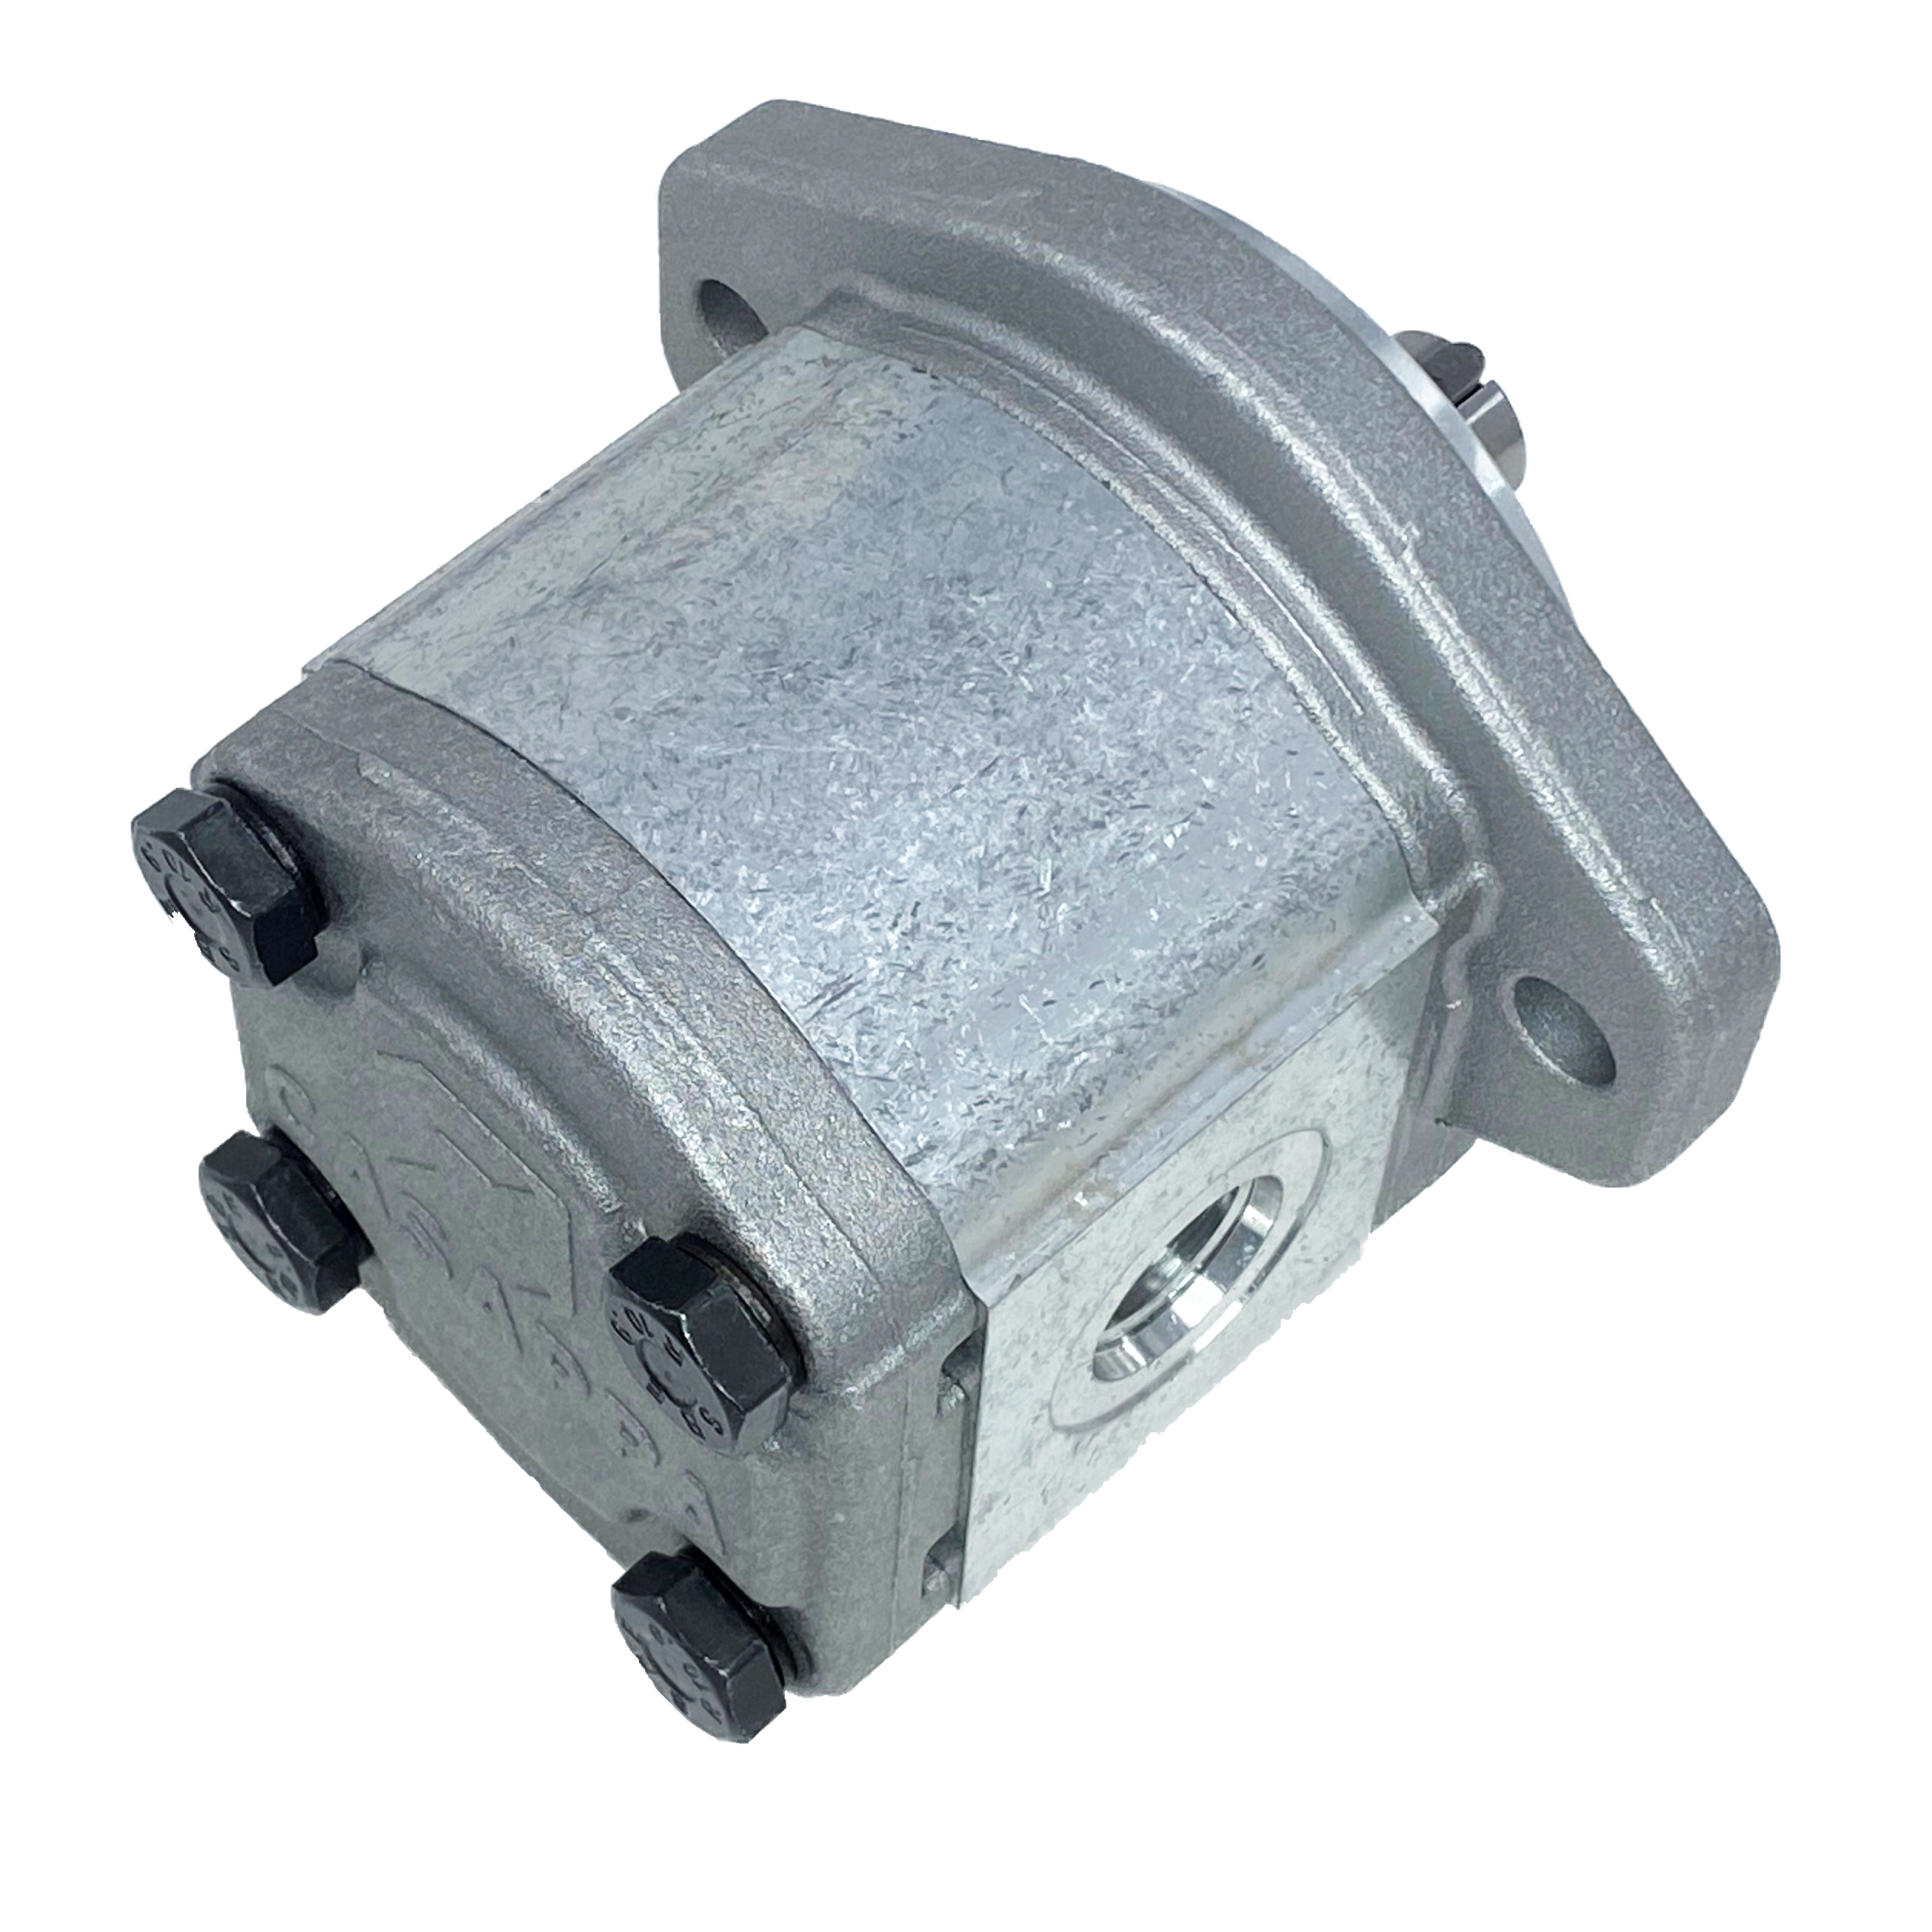 PLM20.14R0-50S1-LOC/OD-N-EL : Casappa Polaris Gear Motor, 14.53cc, 3625psi Rated, 3500RPM, Reversible Rear External Drain, 3/4" Bore x 3/16" Key Shaft, SAE A 2-Bolt Flange, 0.625 (5/8") #10 SAE Inlet, 0.75 (3/4") #12 SAE Outlet, Aluminum Body & Flange